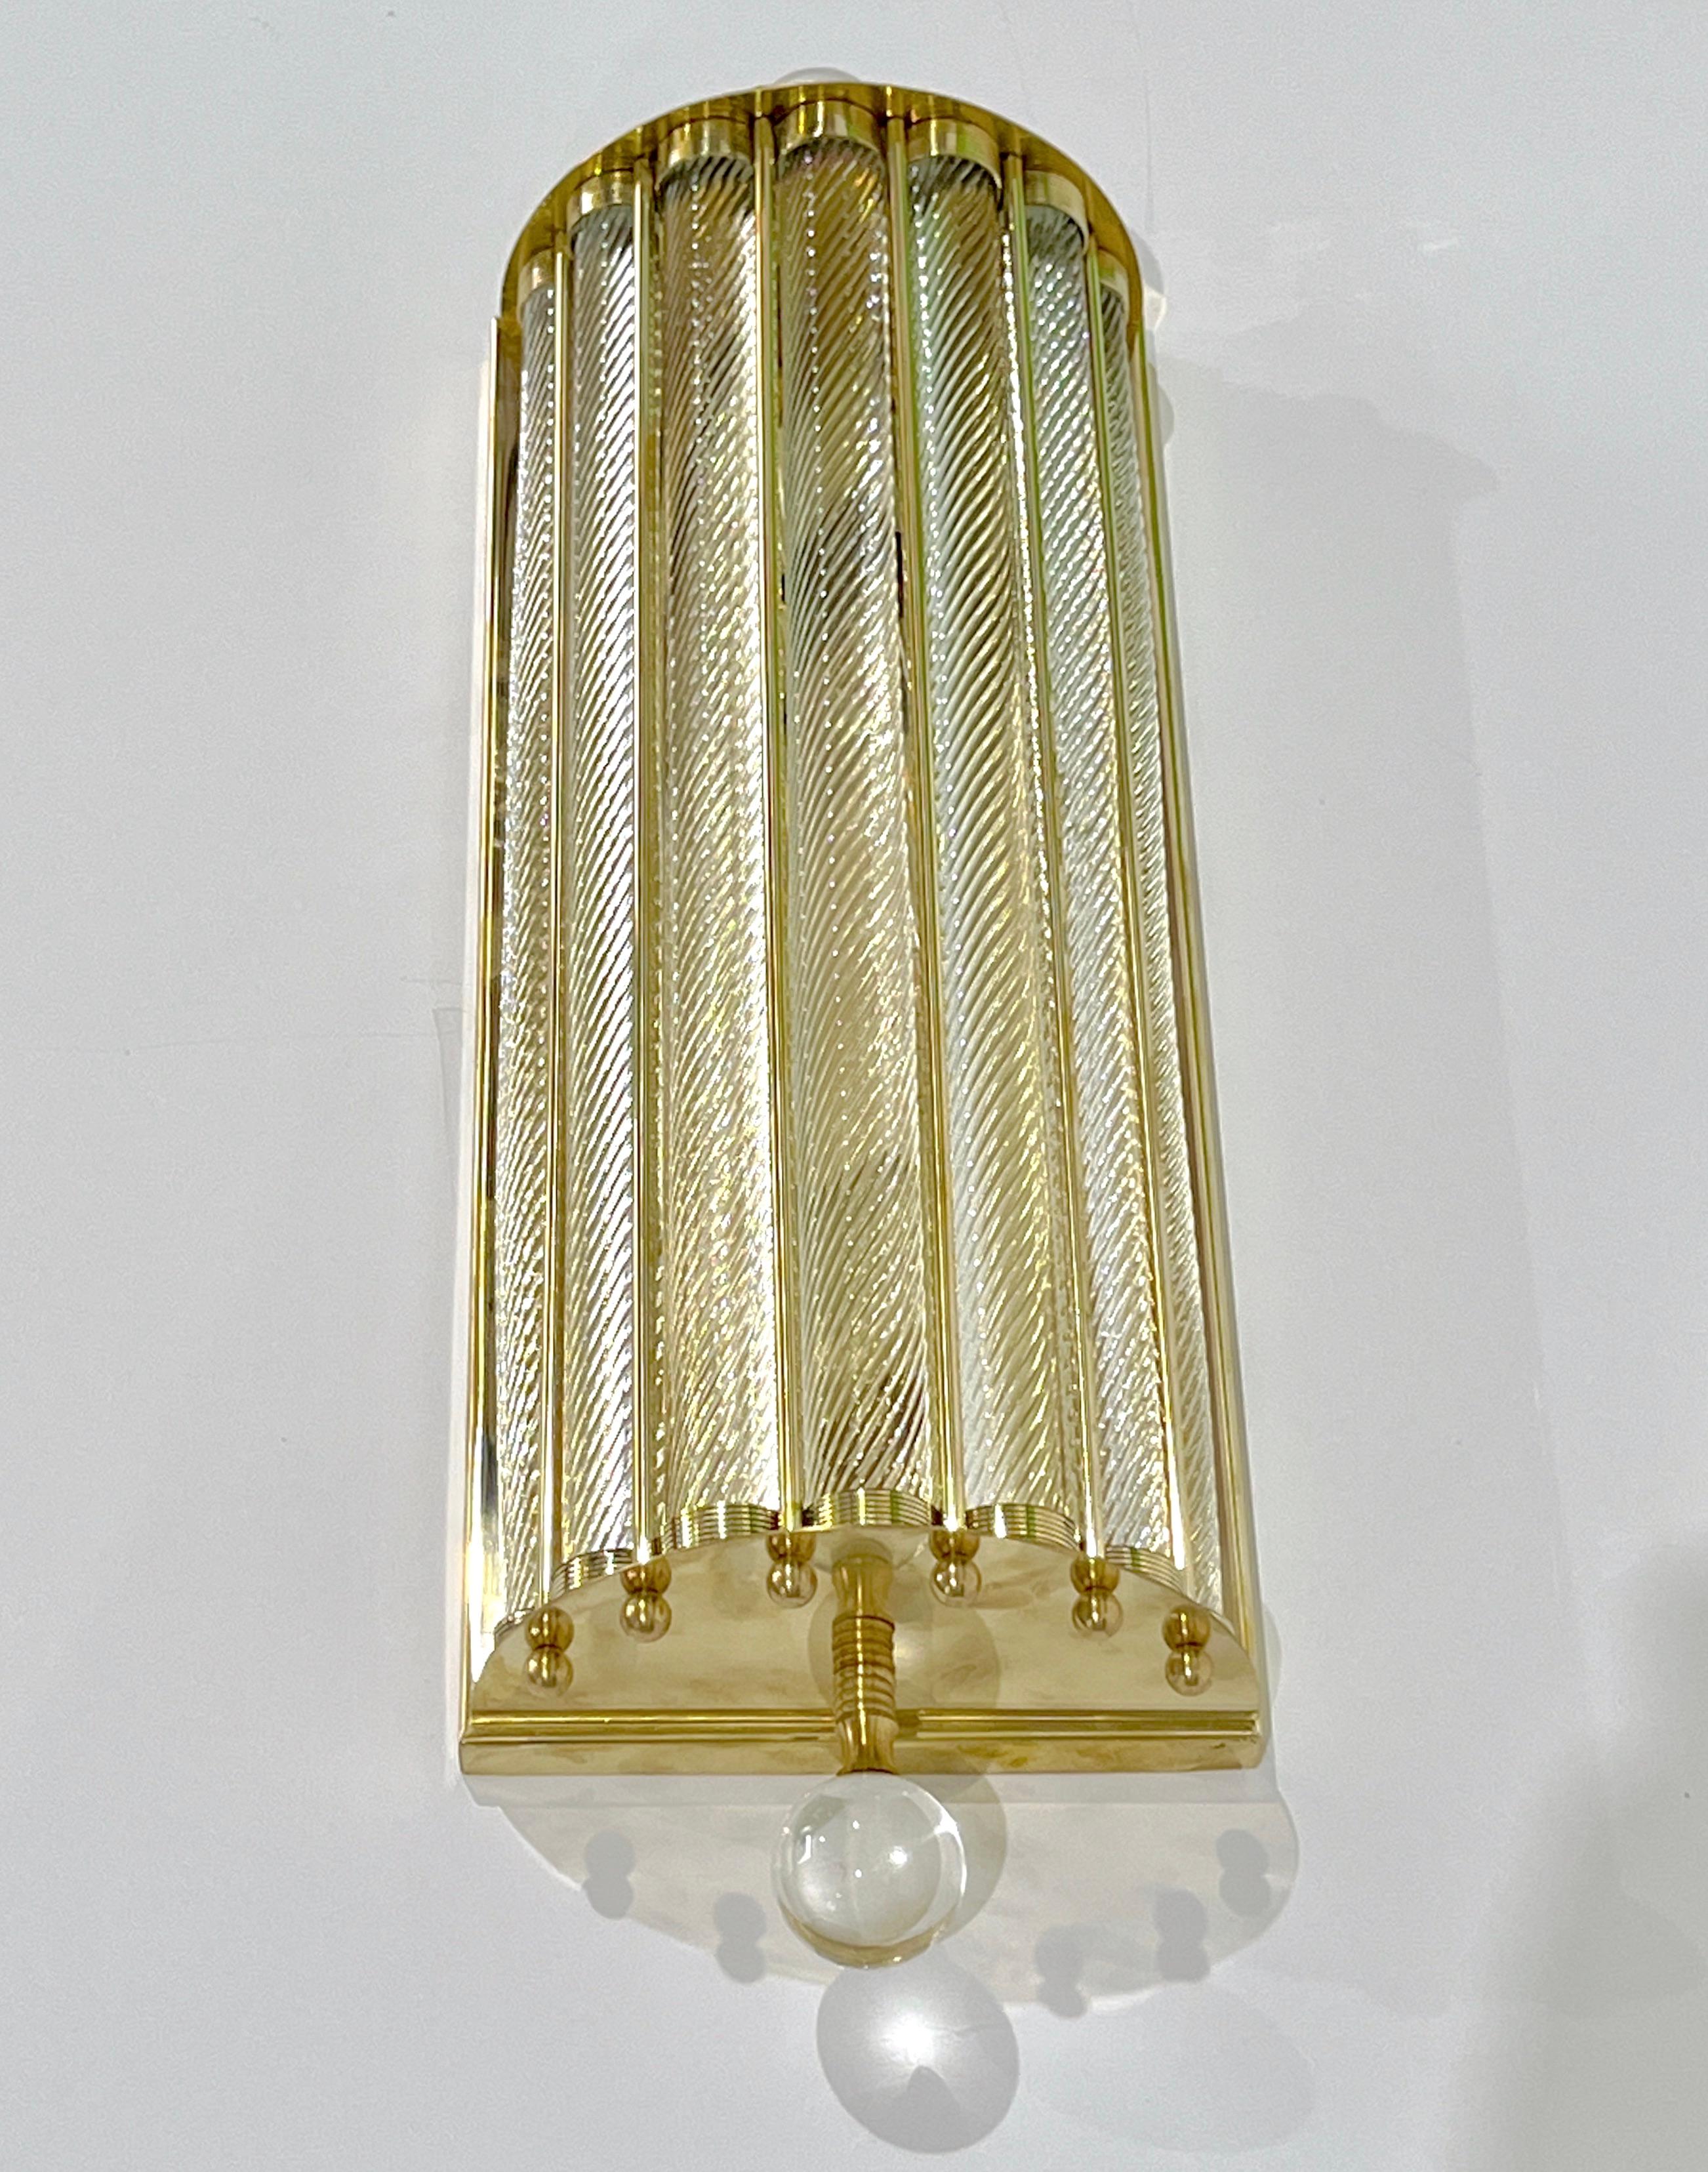 Organic Modern New Italian Art Deco Design Crystal Ball Murano Glass Half Moon Brass Sconces For Sale